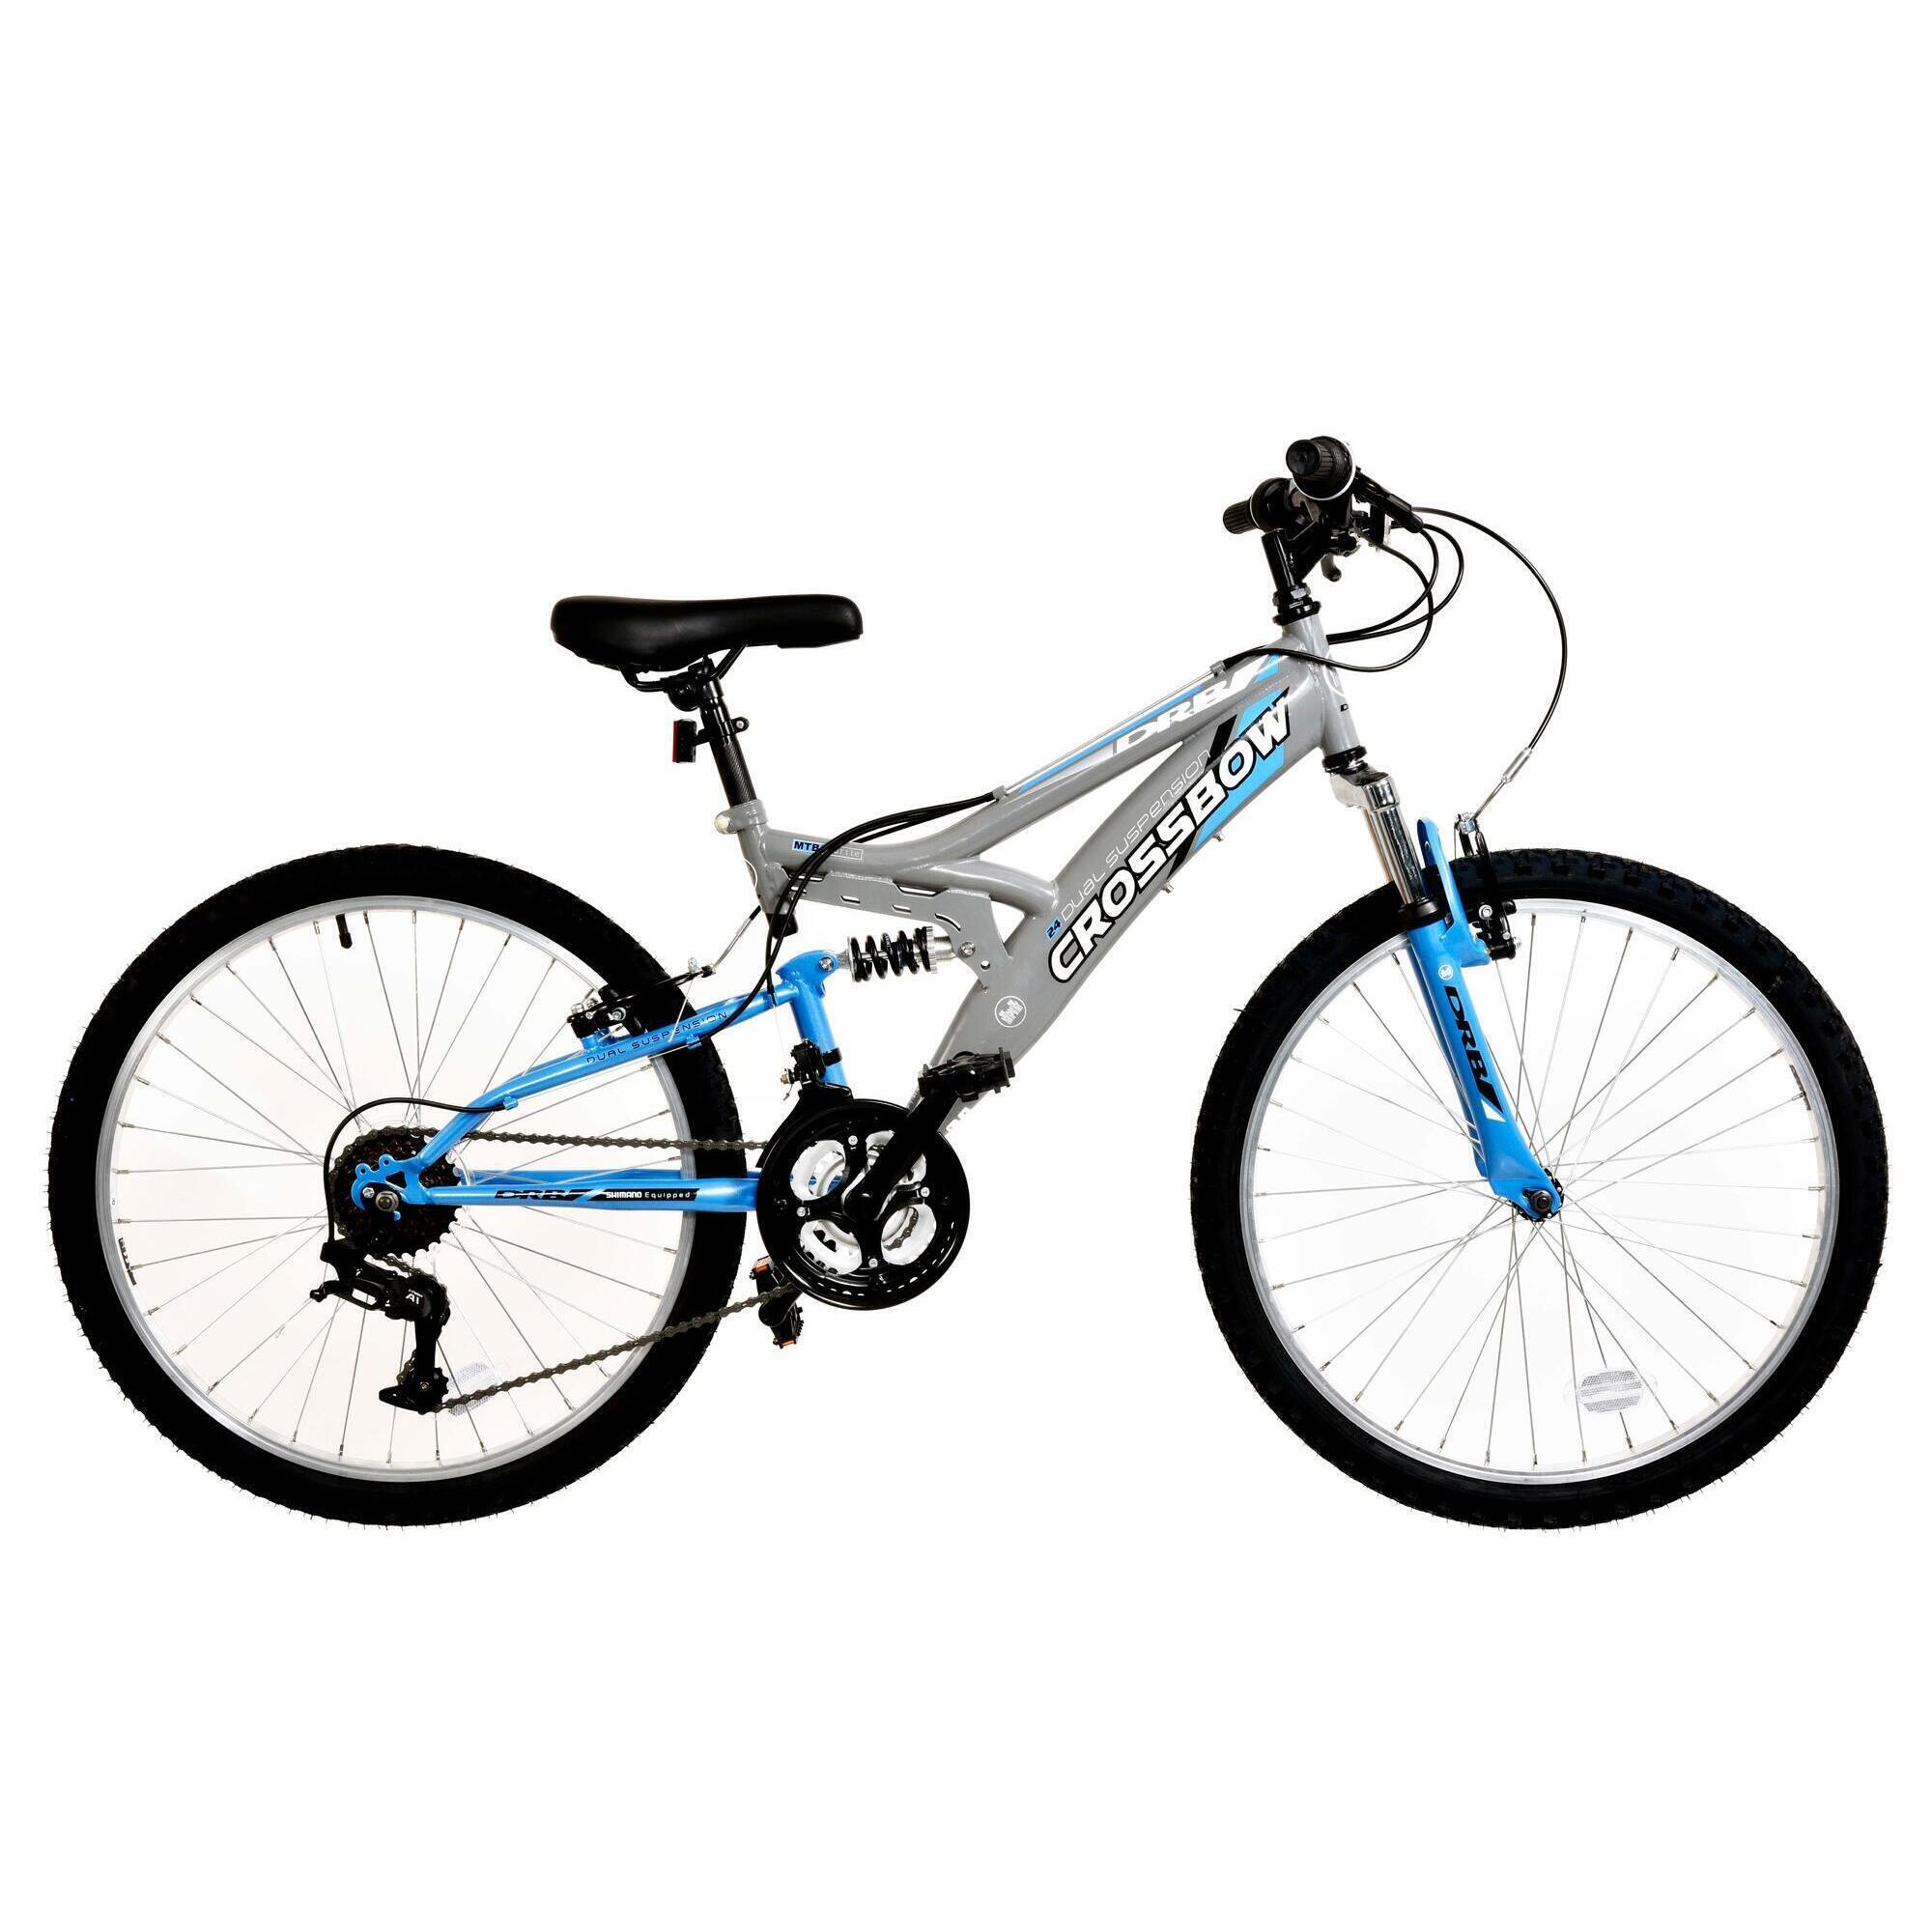 Dallingridge Crossbow Jr. Full Suspension Mountain Bike, 24In Wheel - Grey/Blue 1/3